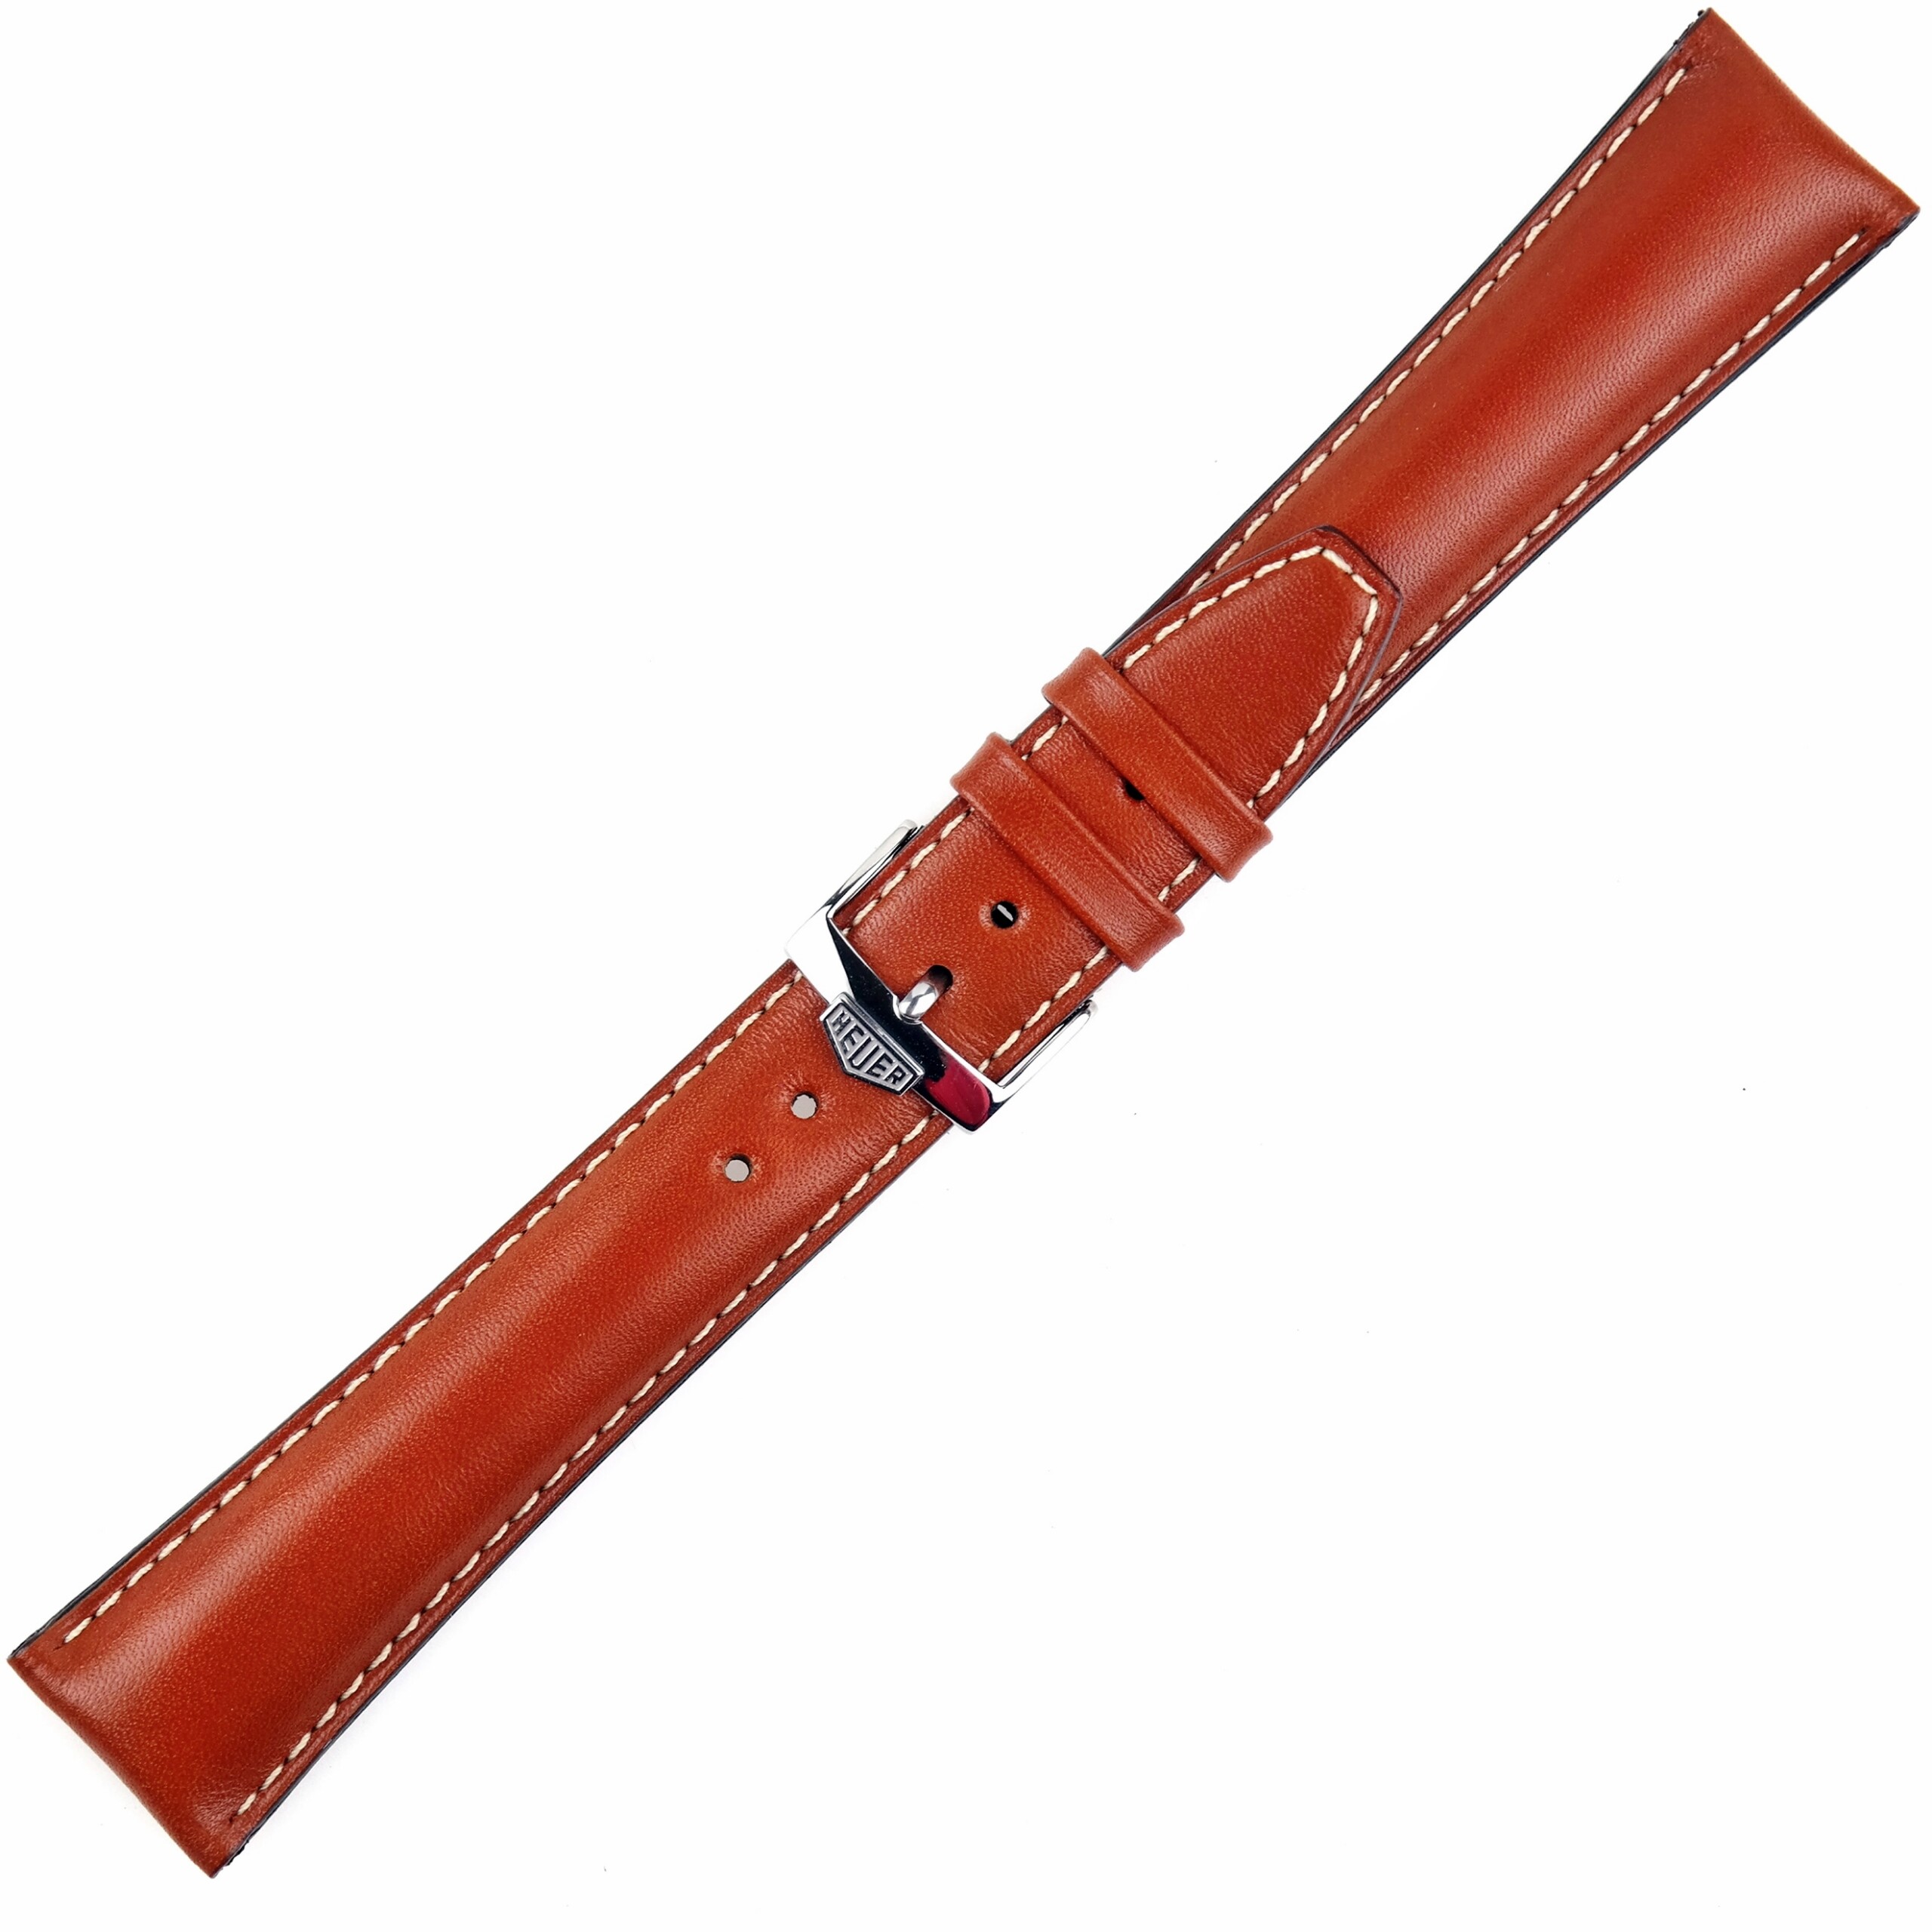 Authentic HEUER Monaco - XL Watch Strap with Original Buckle